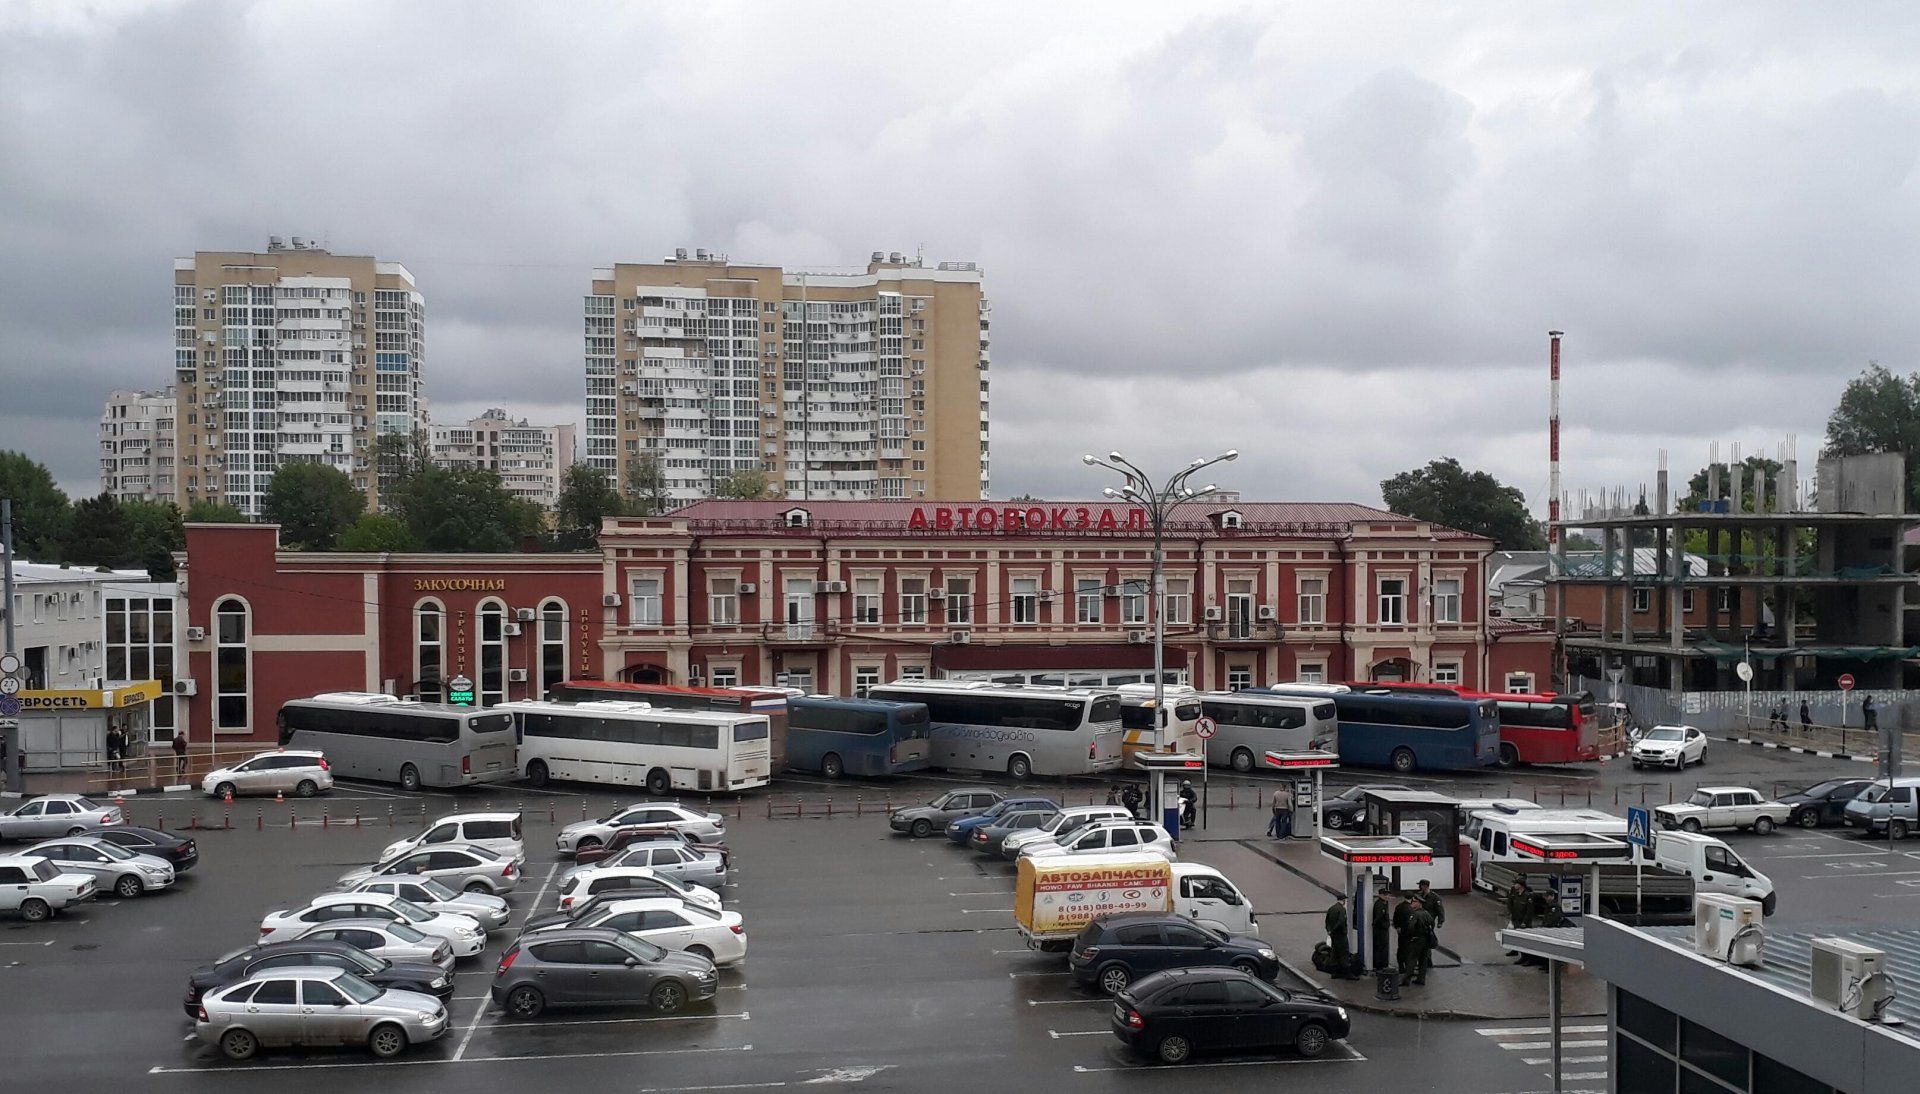 Автовокзал краснодар привокзальная. Привокзальная площадь 1 Краснодар. Привокзальная площадь Краснодар. Краснодар-1 (Центральный автовокзал). Привокзальная площадь 5 Краснодар автовокзал.